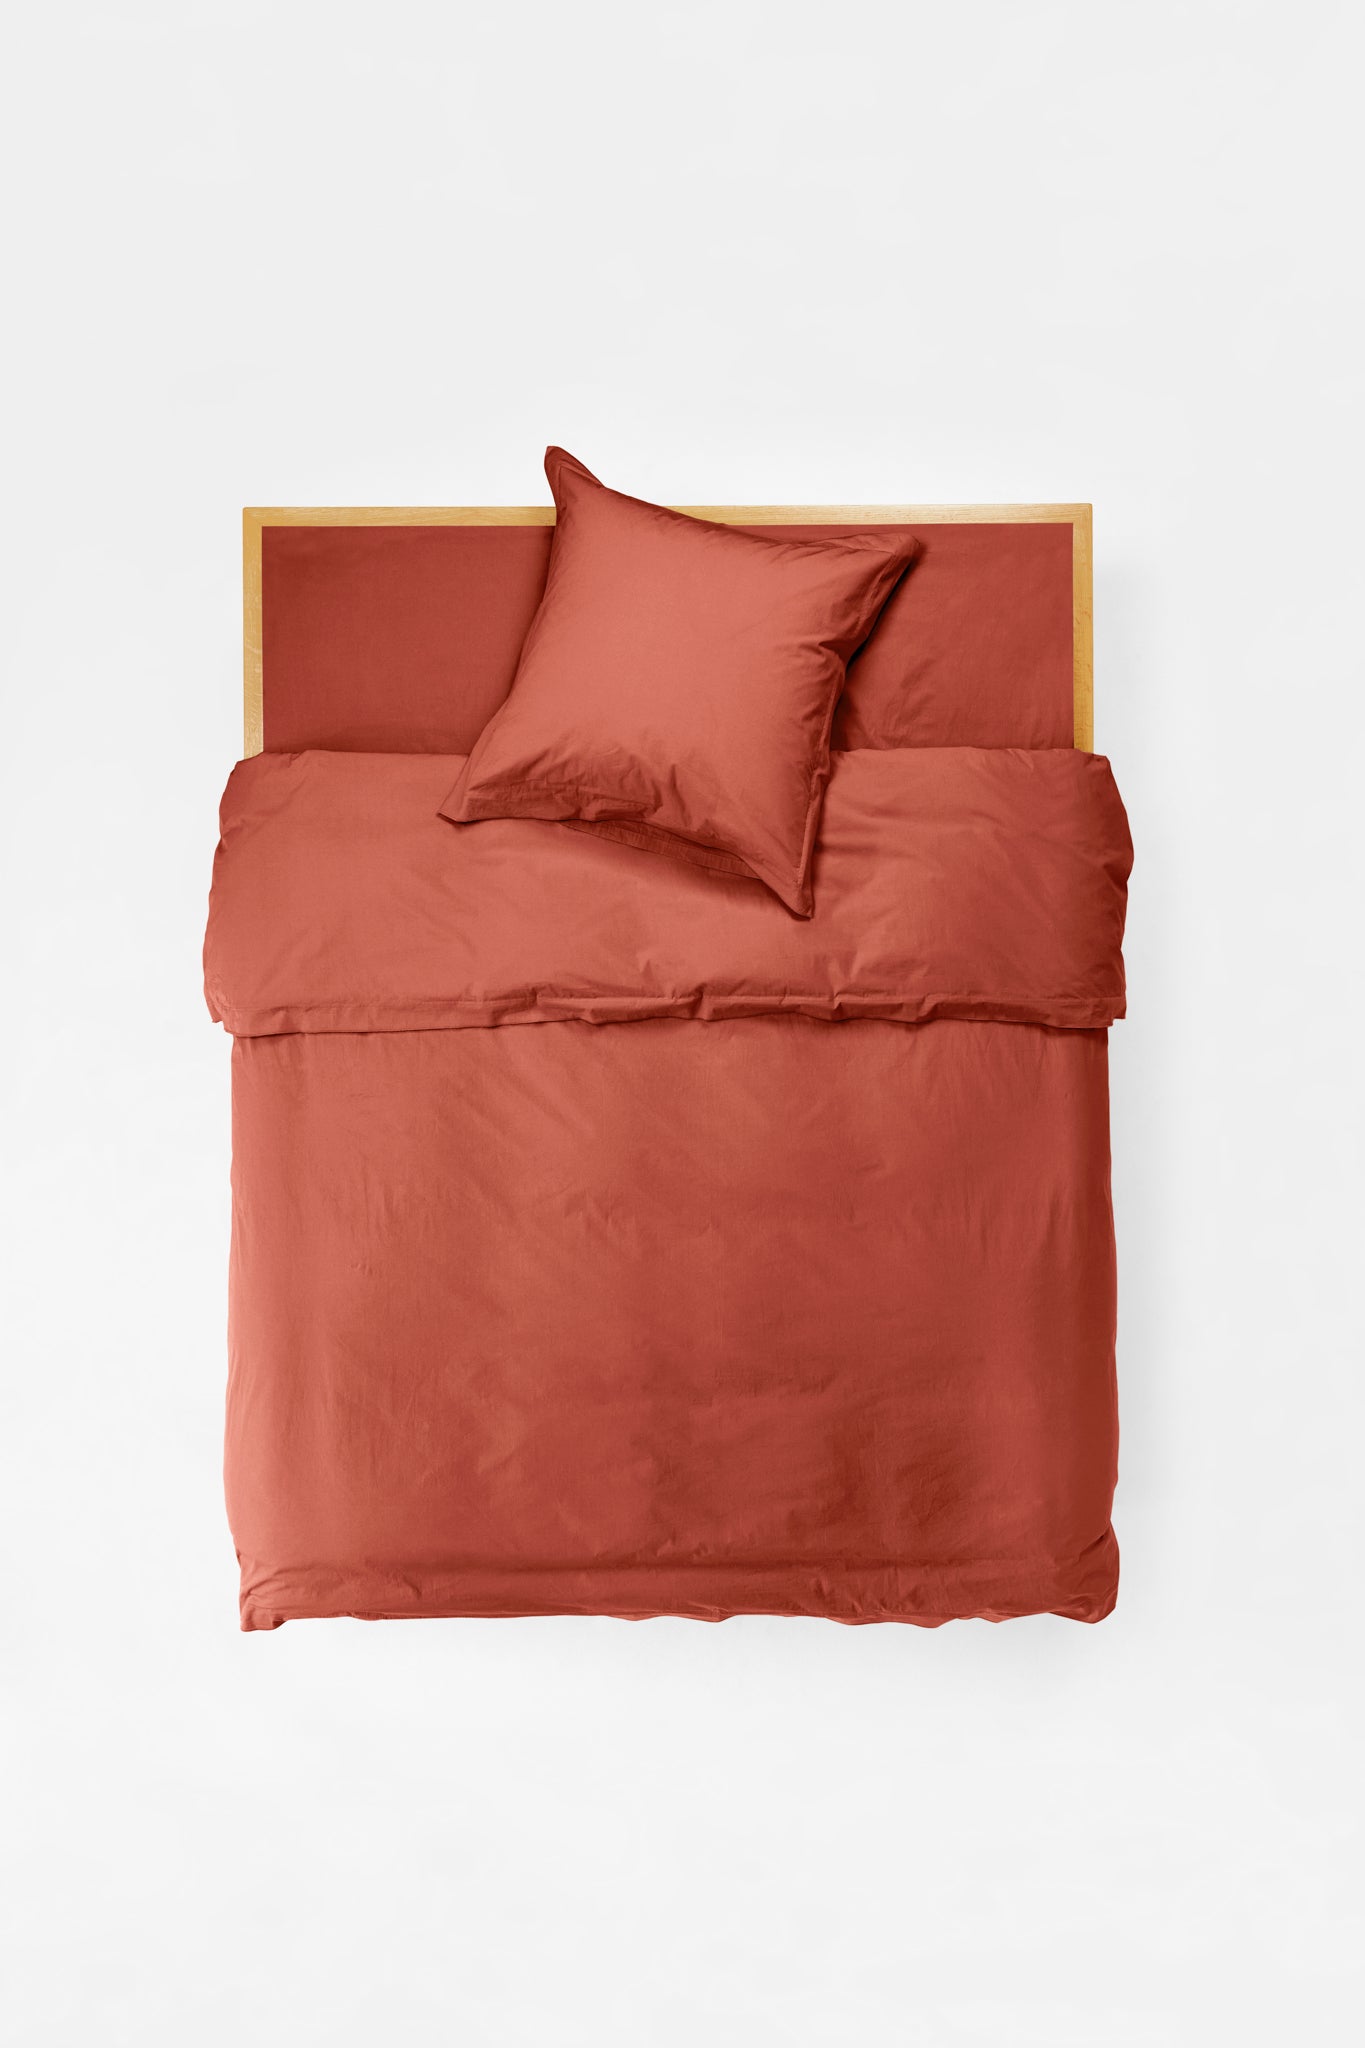 Euro Pillowcase Pair in Ochre Red